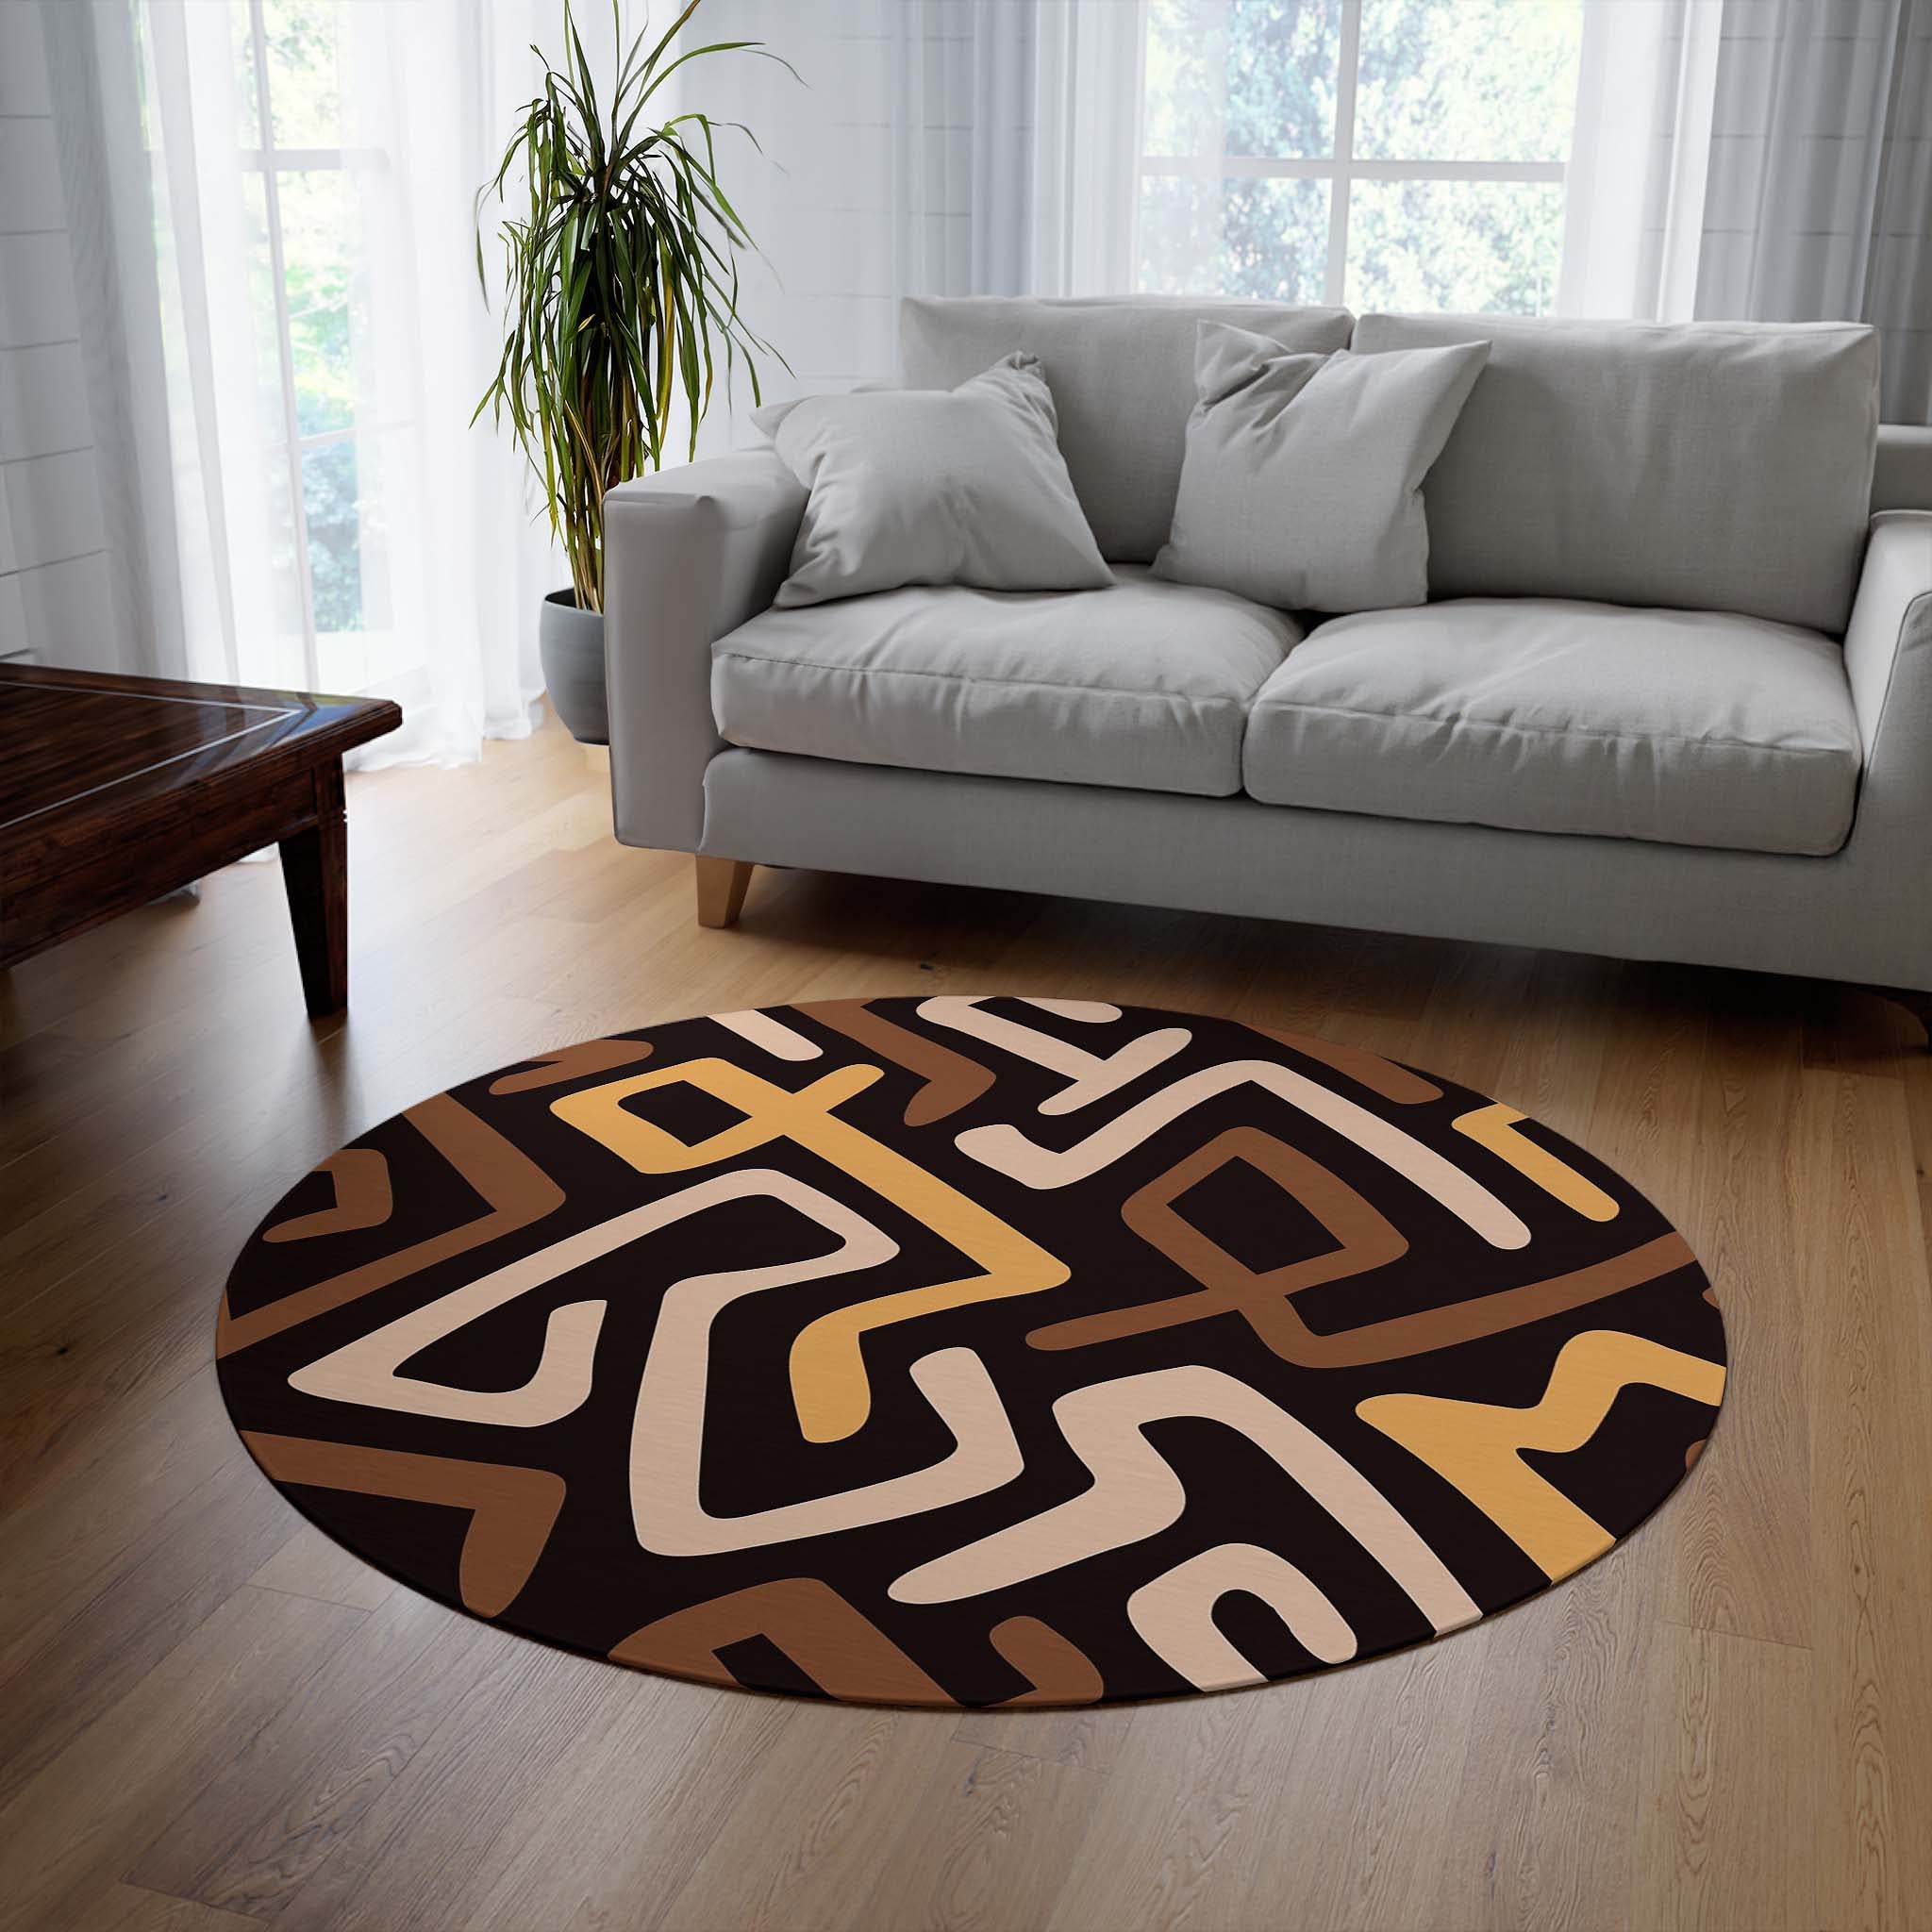 Round African Rugs in Kuba Print Indoor Carpet - Bynelo